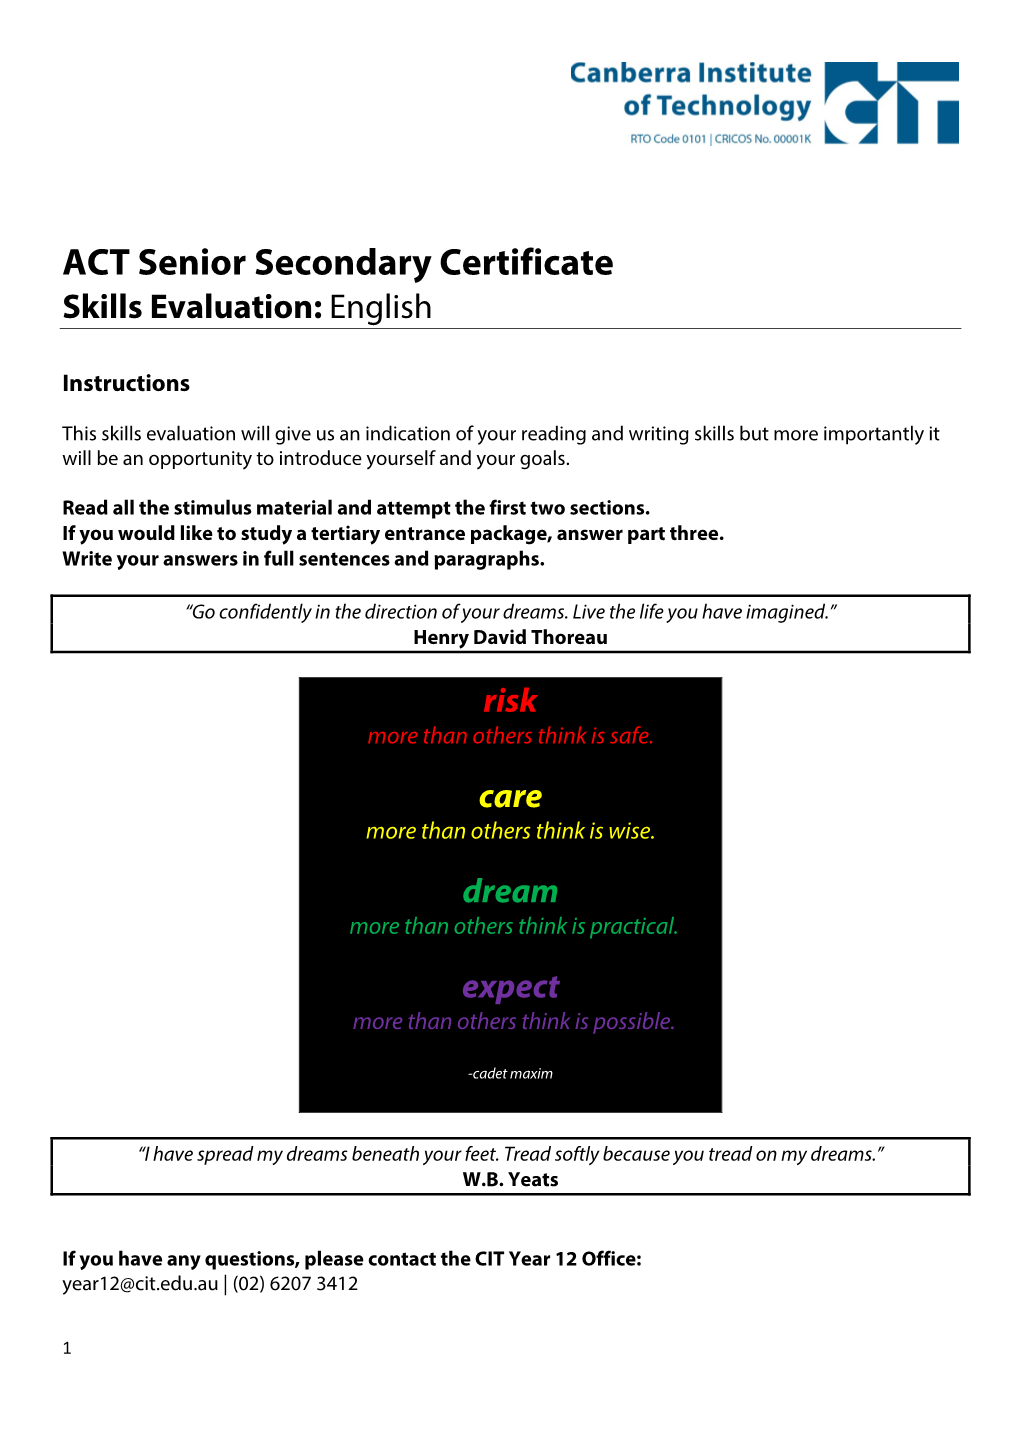 ACT Senior Secondary Certificate Skills Evaluation: English